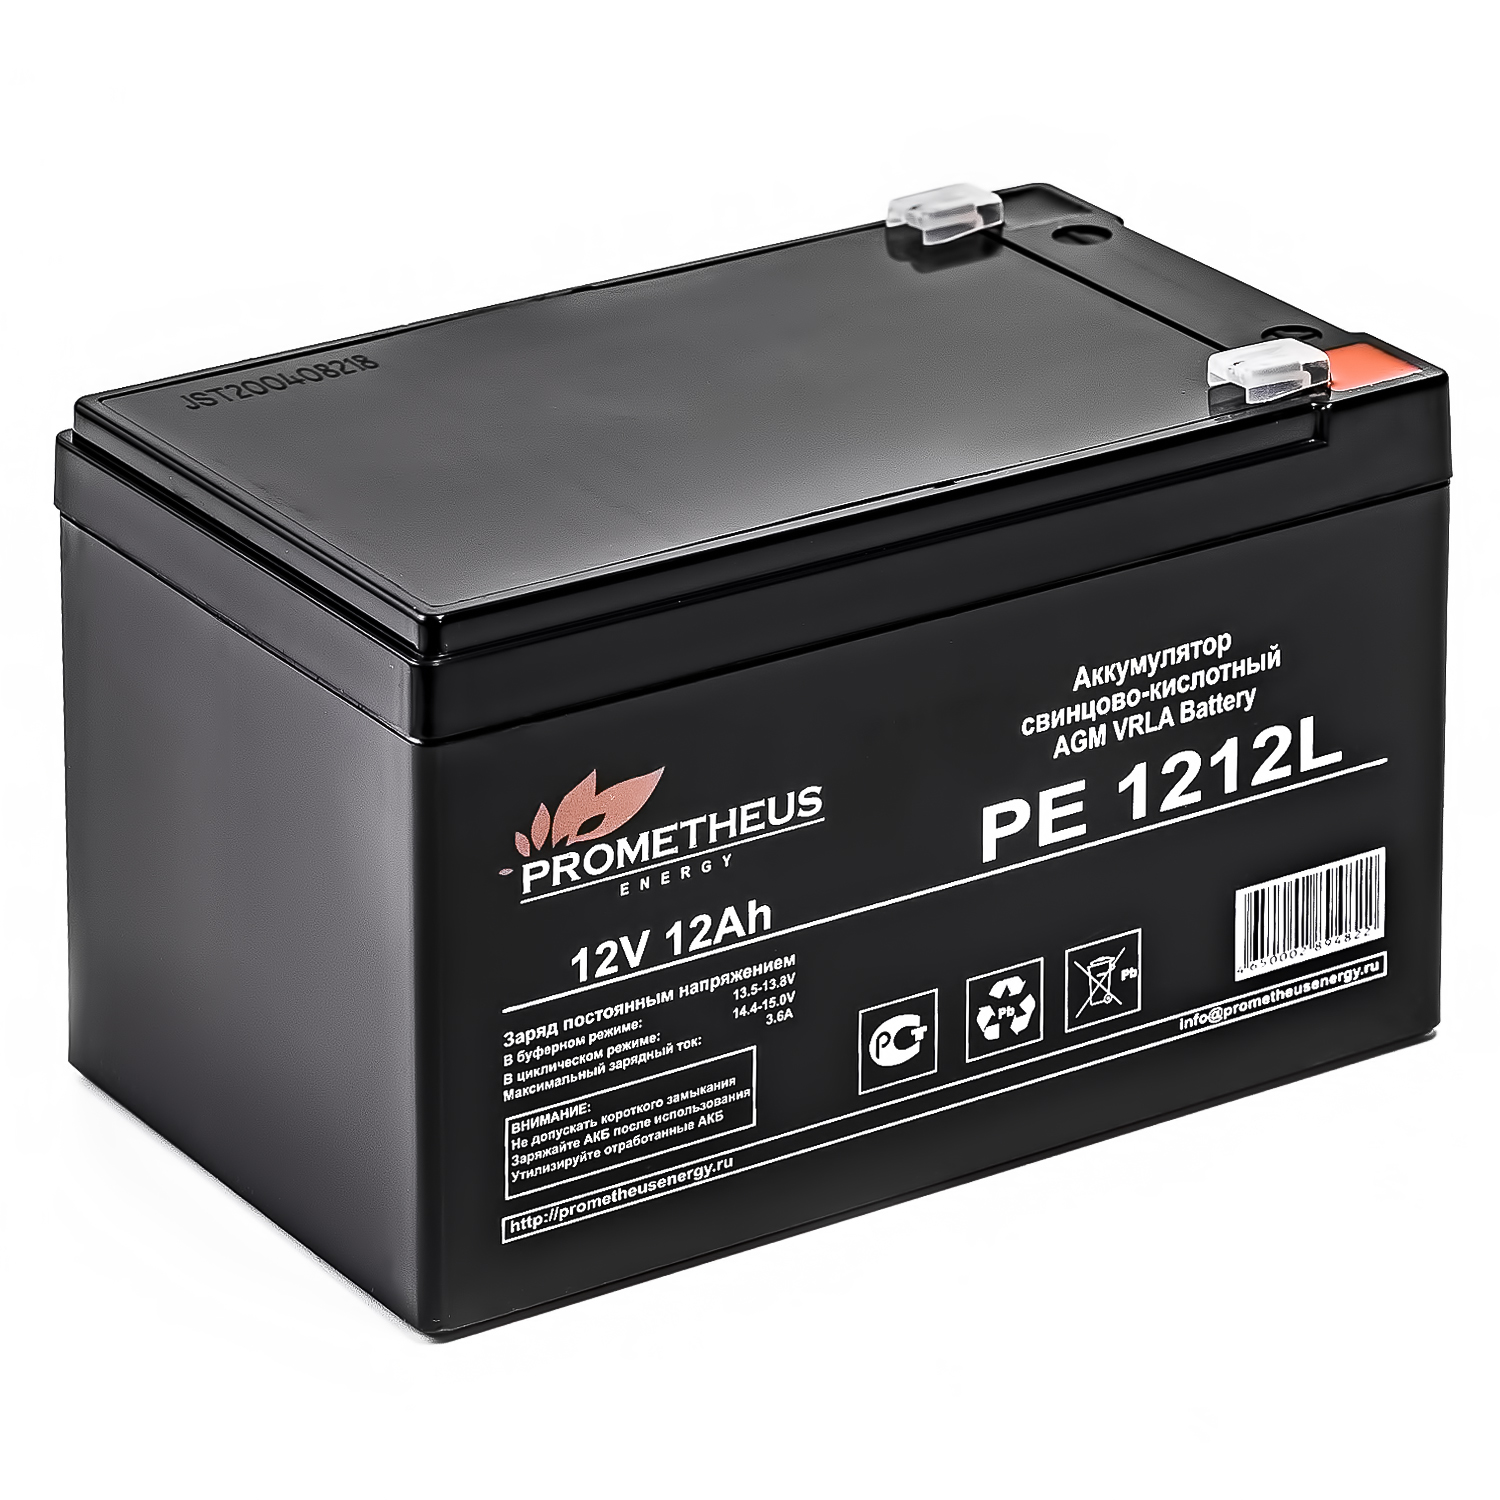 Батарея для ИБП Prometheus Energy PE 1212L 12В 12Ач батарея для ибп prometheus energy pe 1207 12в 7 2ач